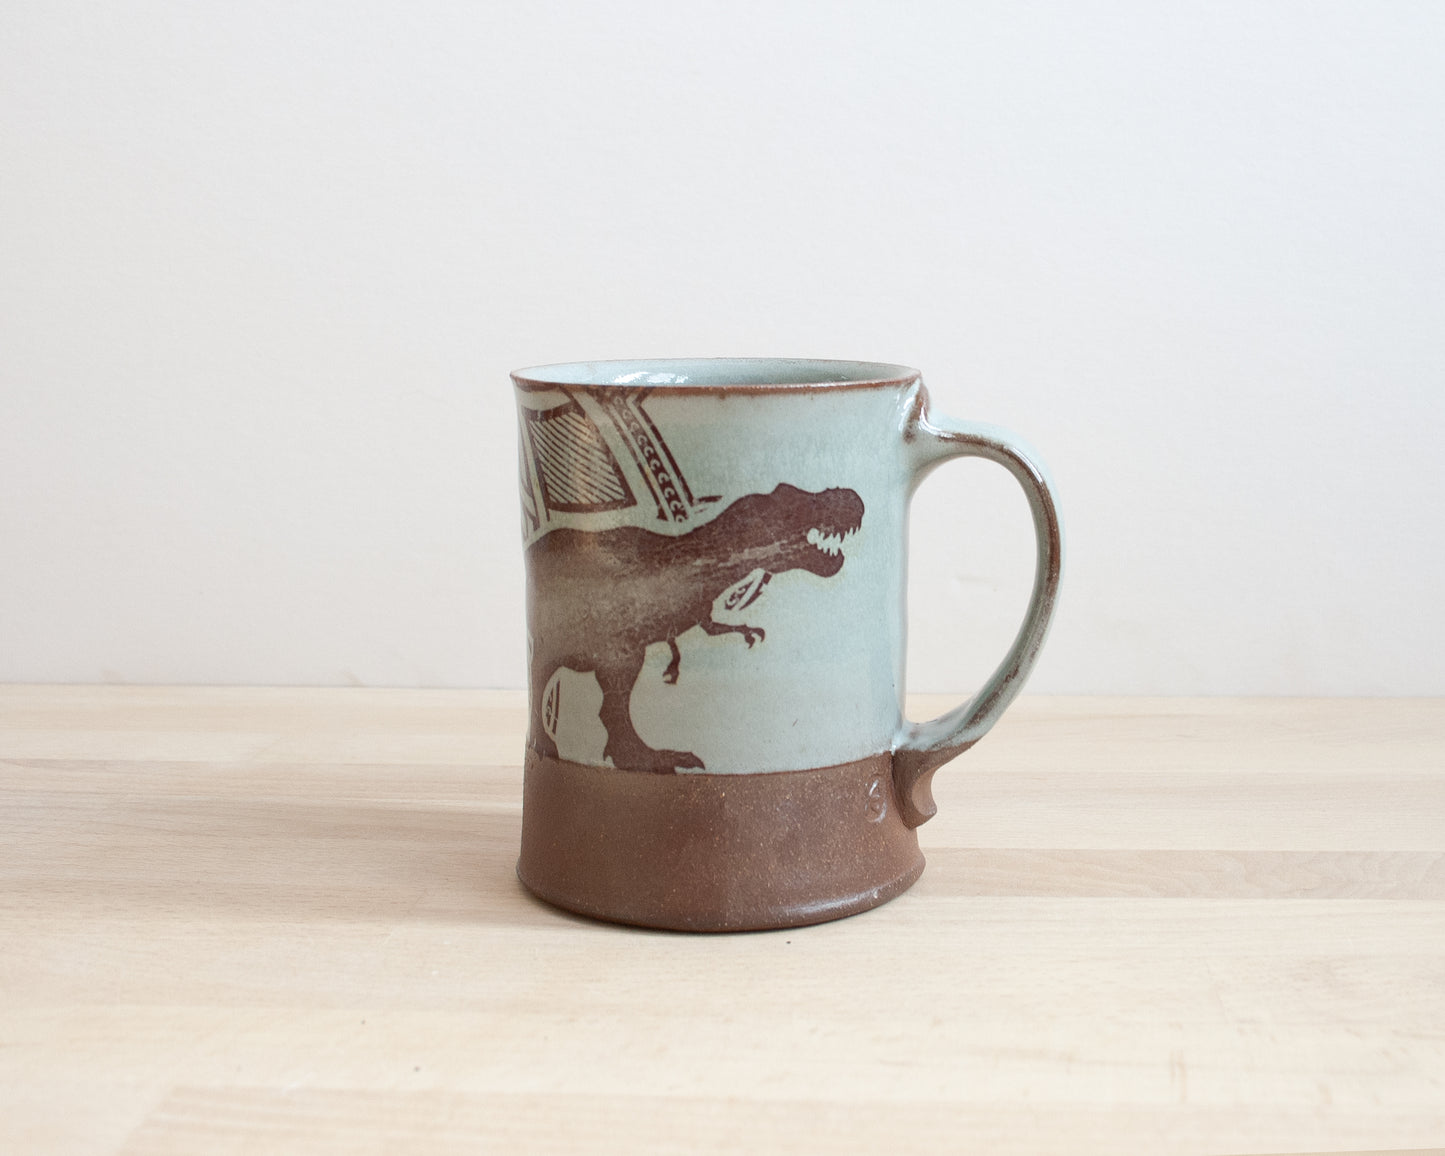 T-Rex Mug with pattern - blue